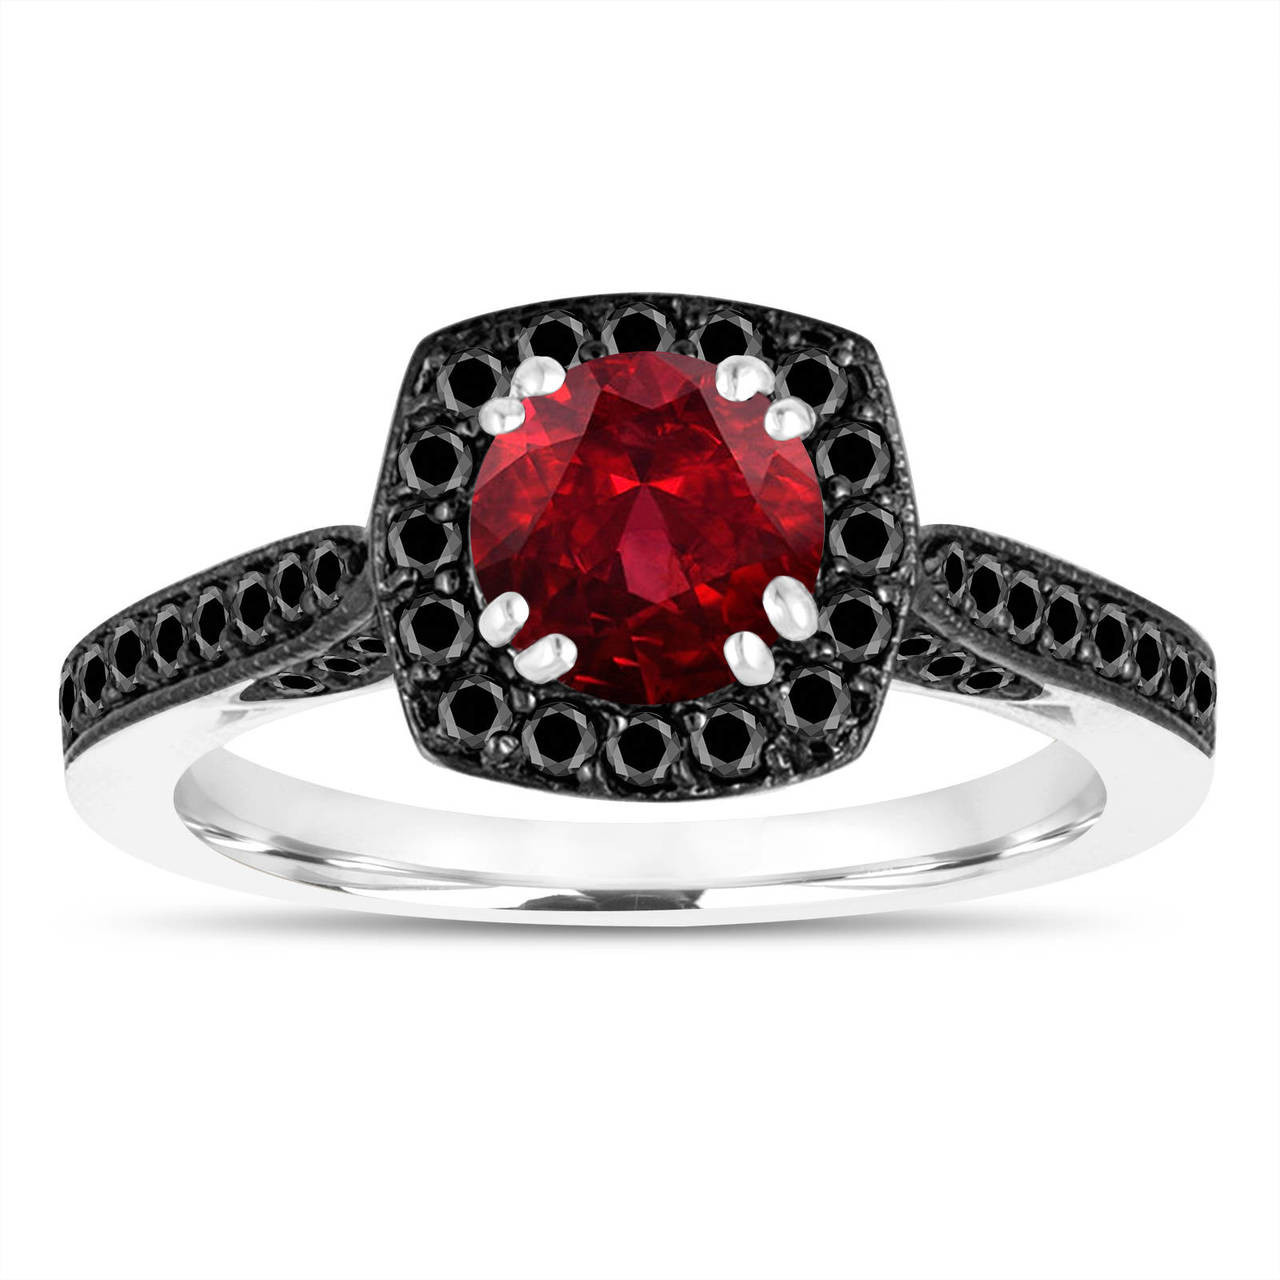 1.41 Carat Engagement Ring, With Black Diamonds